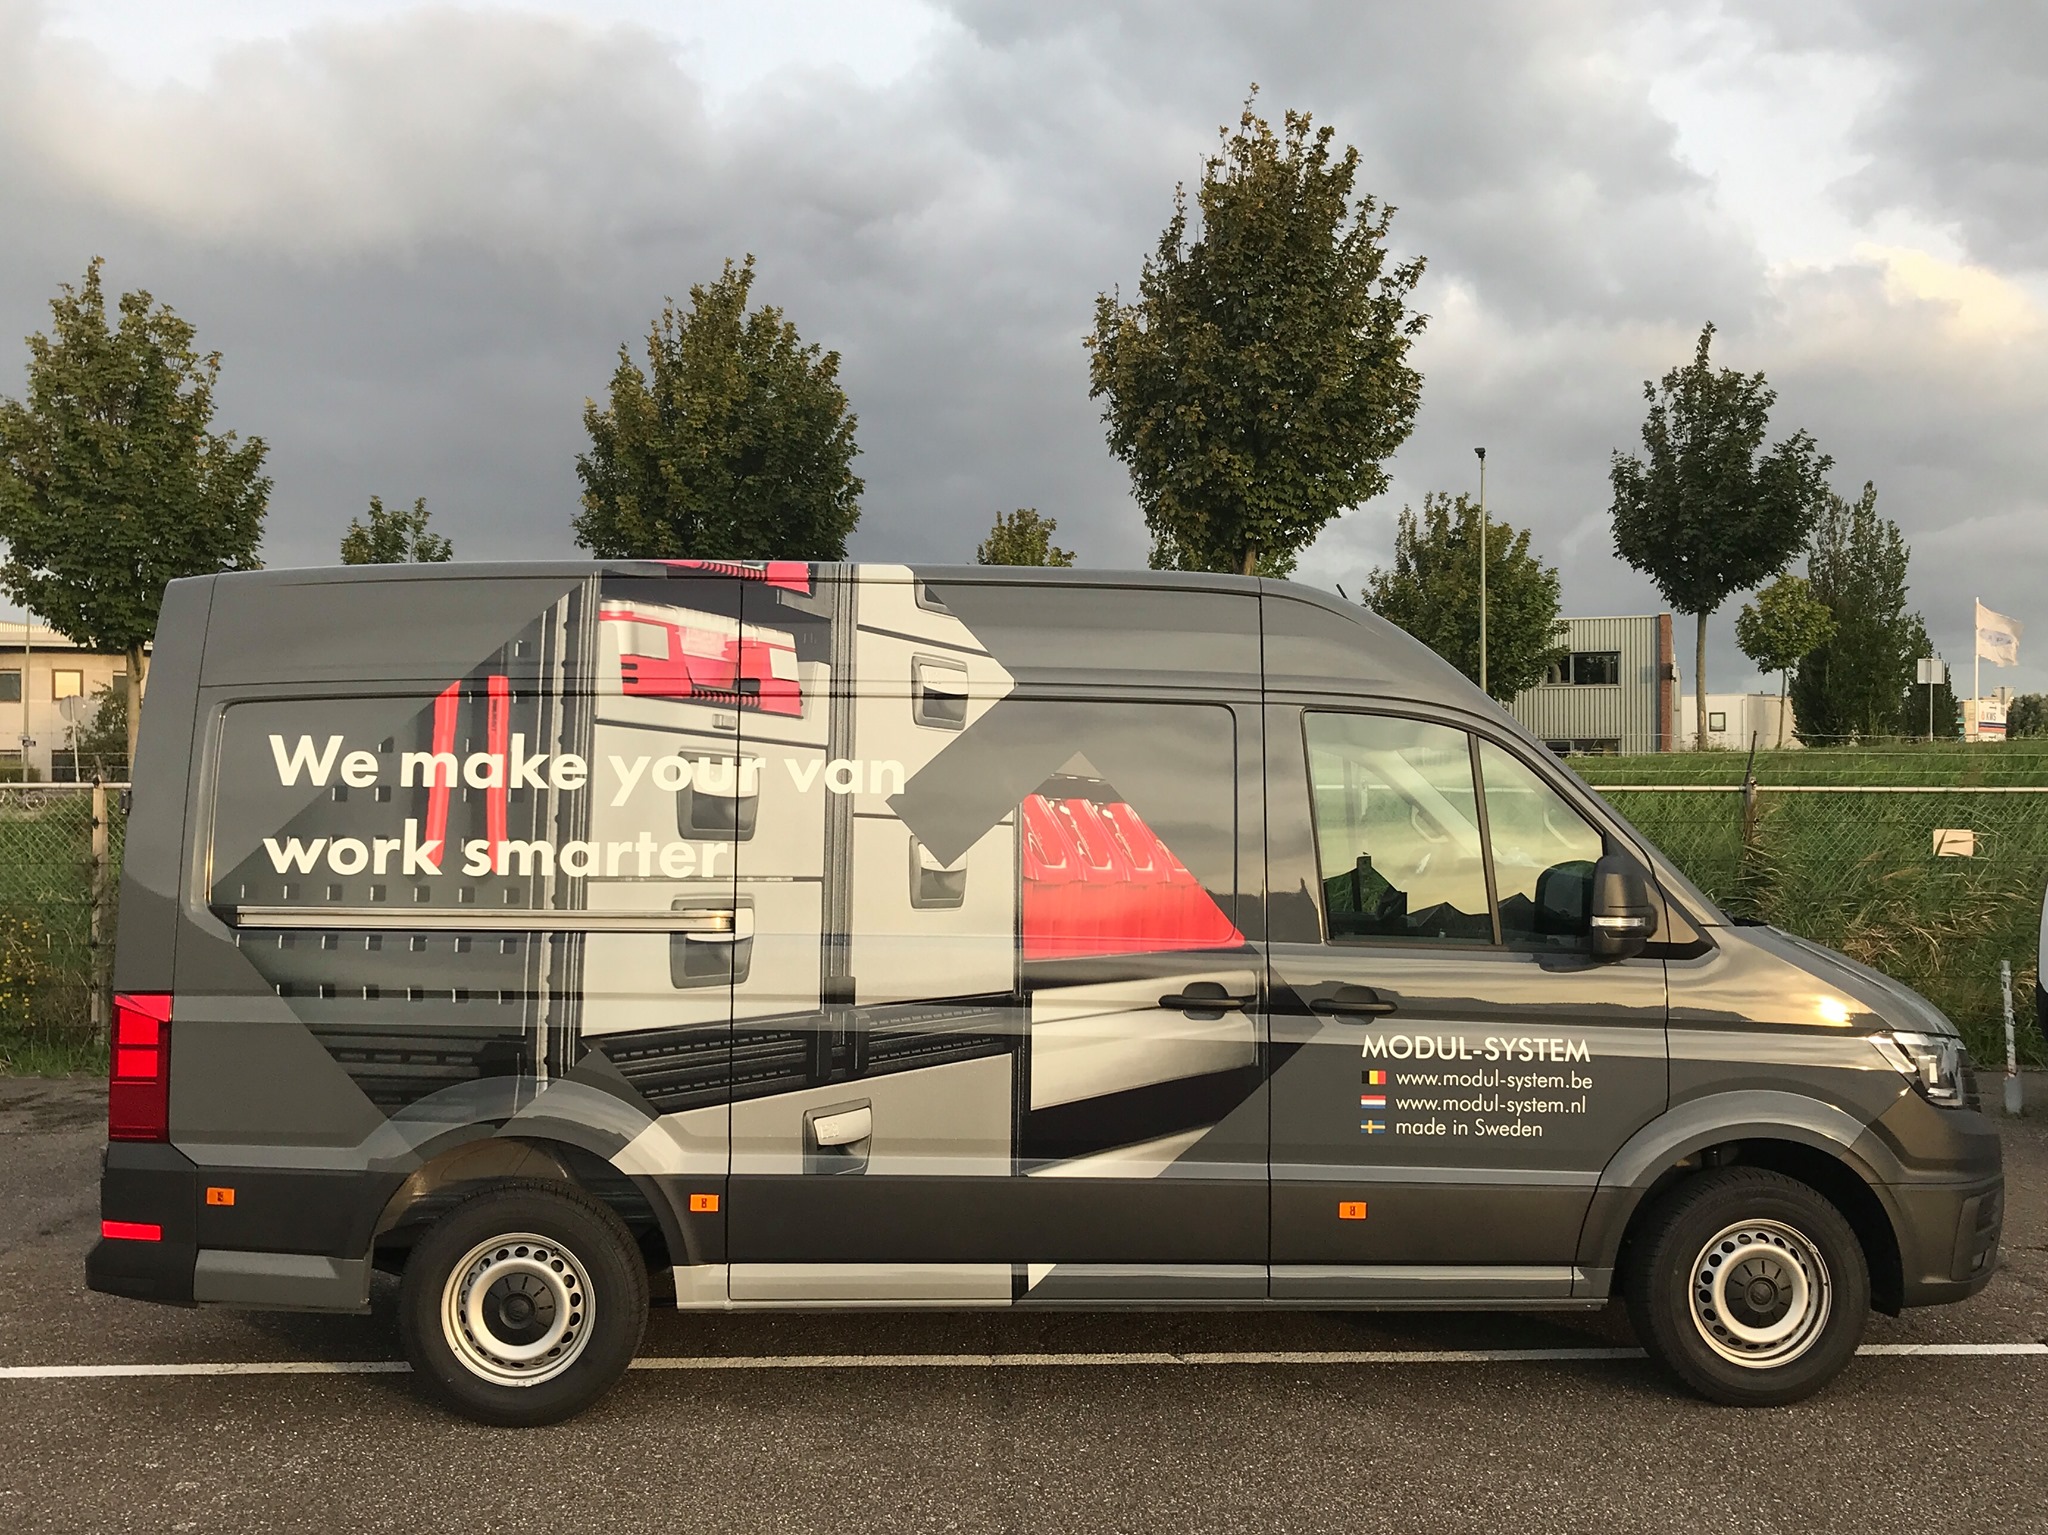 New demo van from Modul-System Benelux